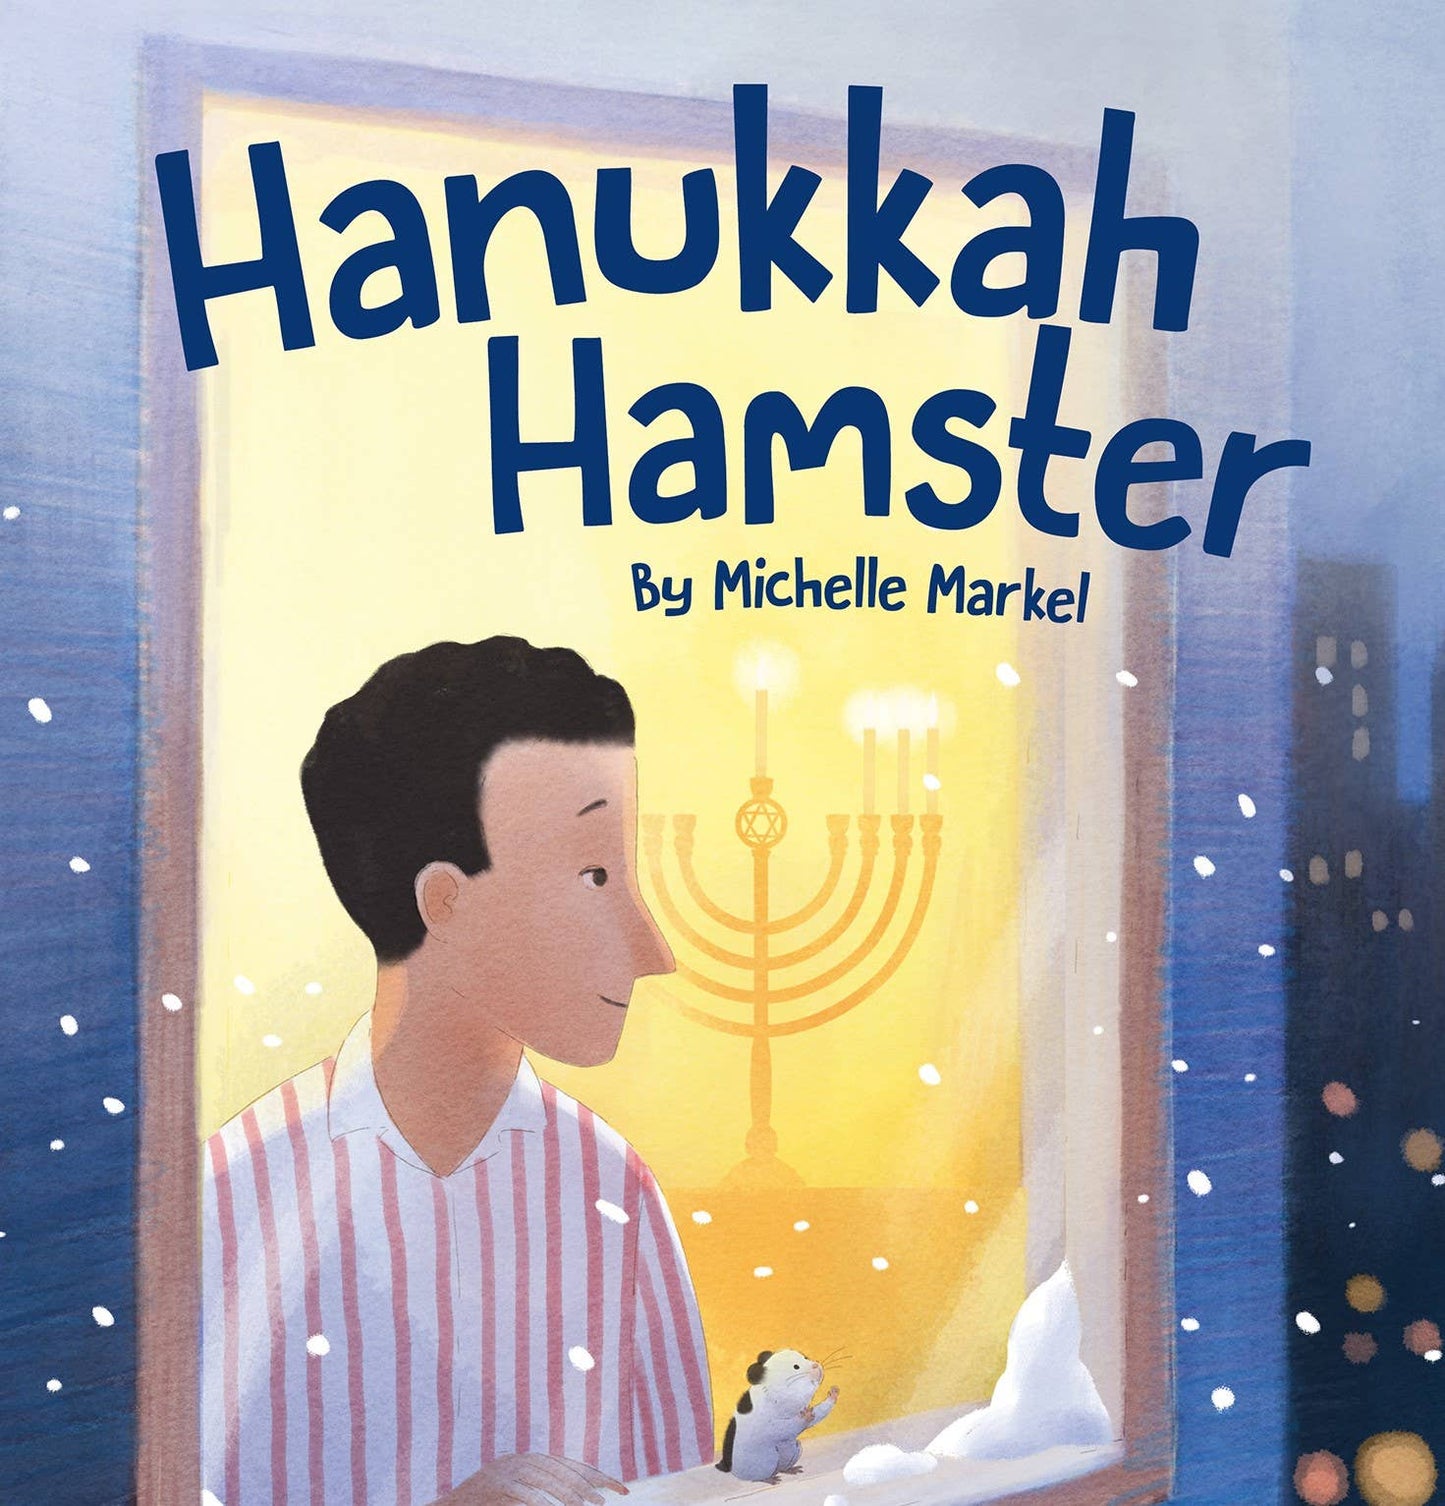 Hanukkah Hamster by Michelle Markel (Hardcover)